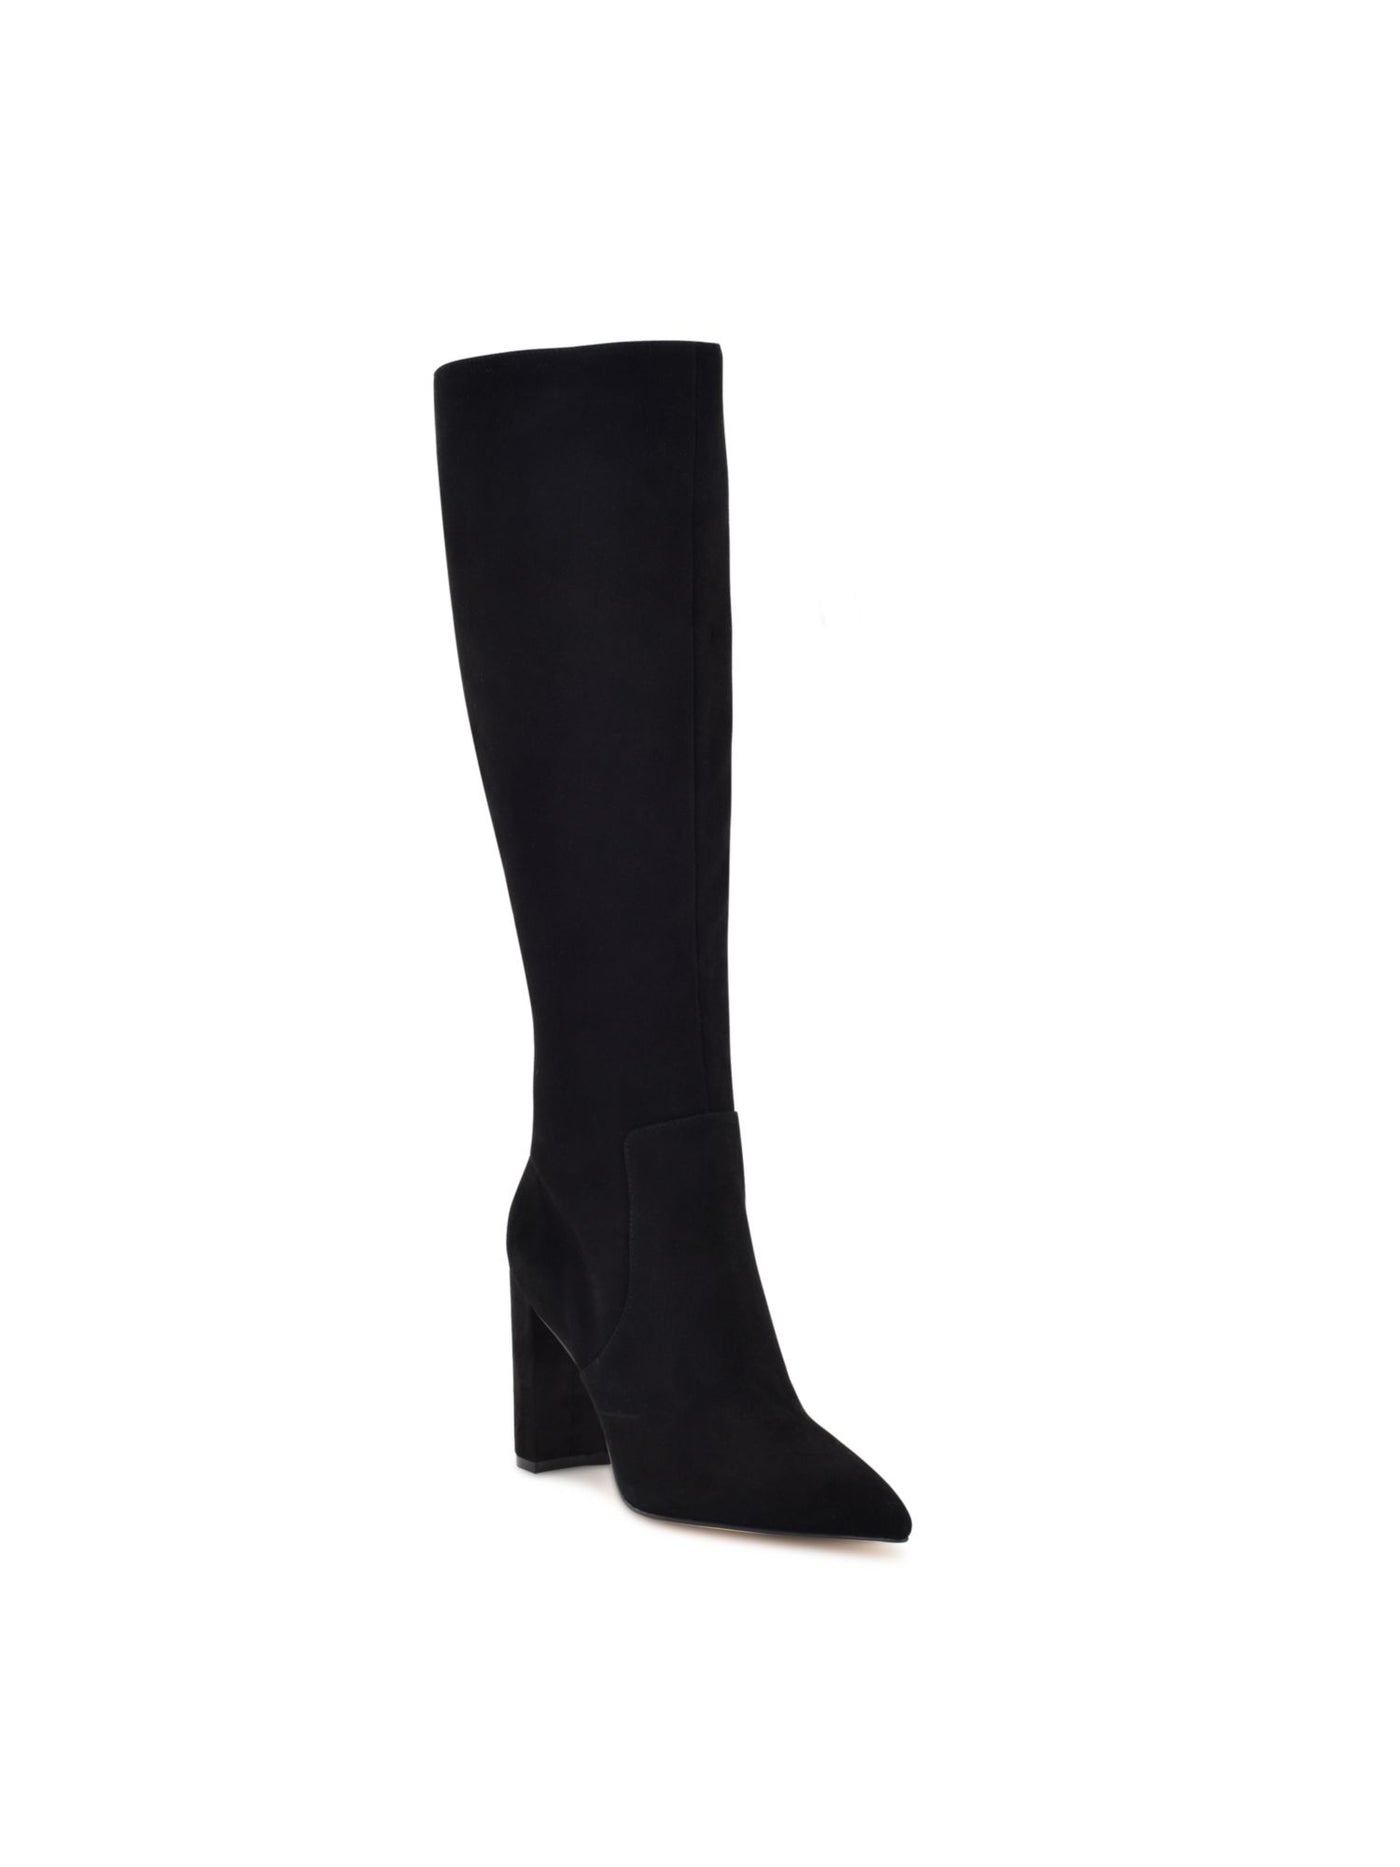 NINE WEST Womens Black Comfort Danee Pointed Toe Block Heel Zip-Up Leather Dress Boots 5.5 M